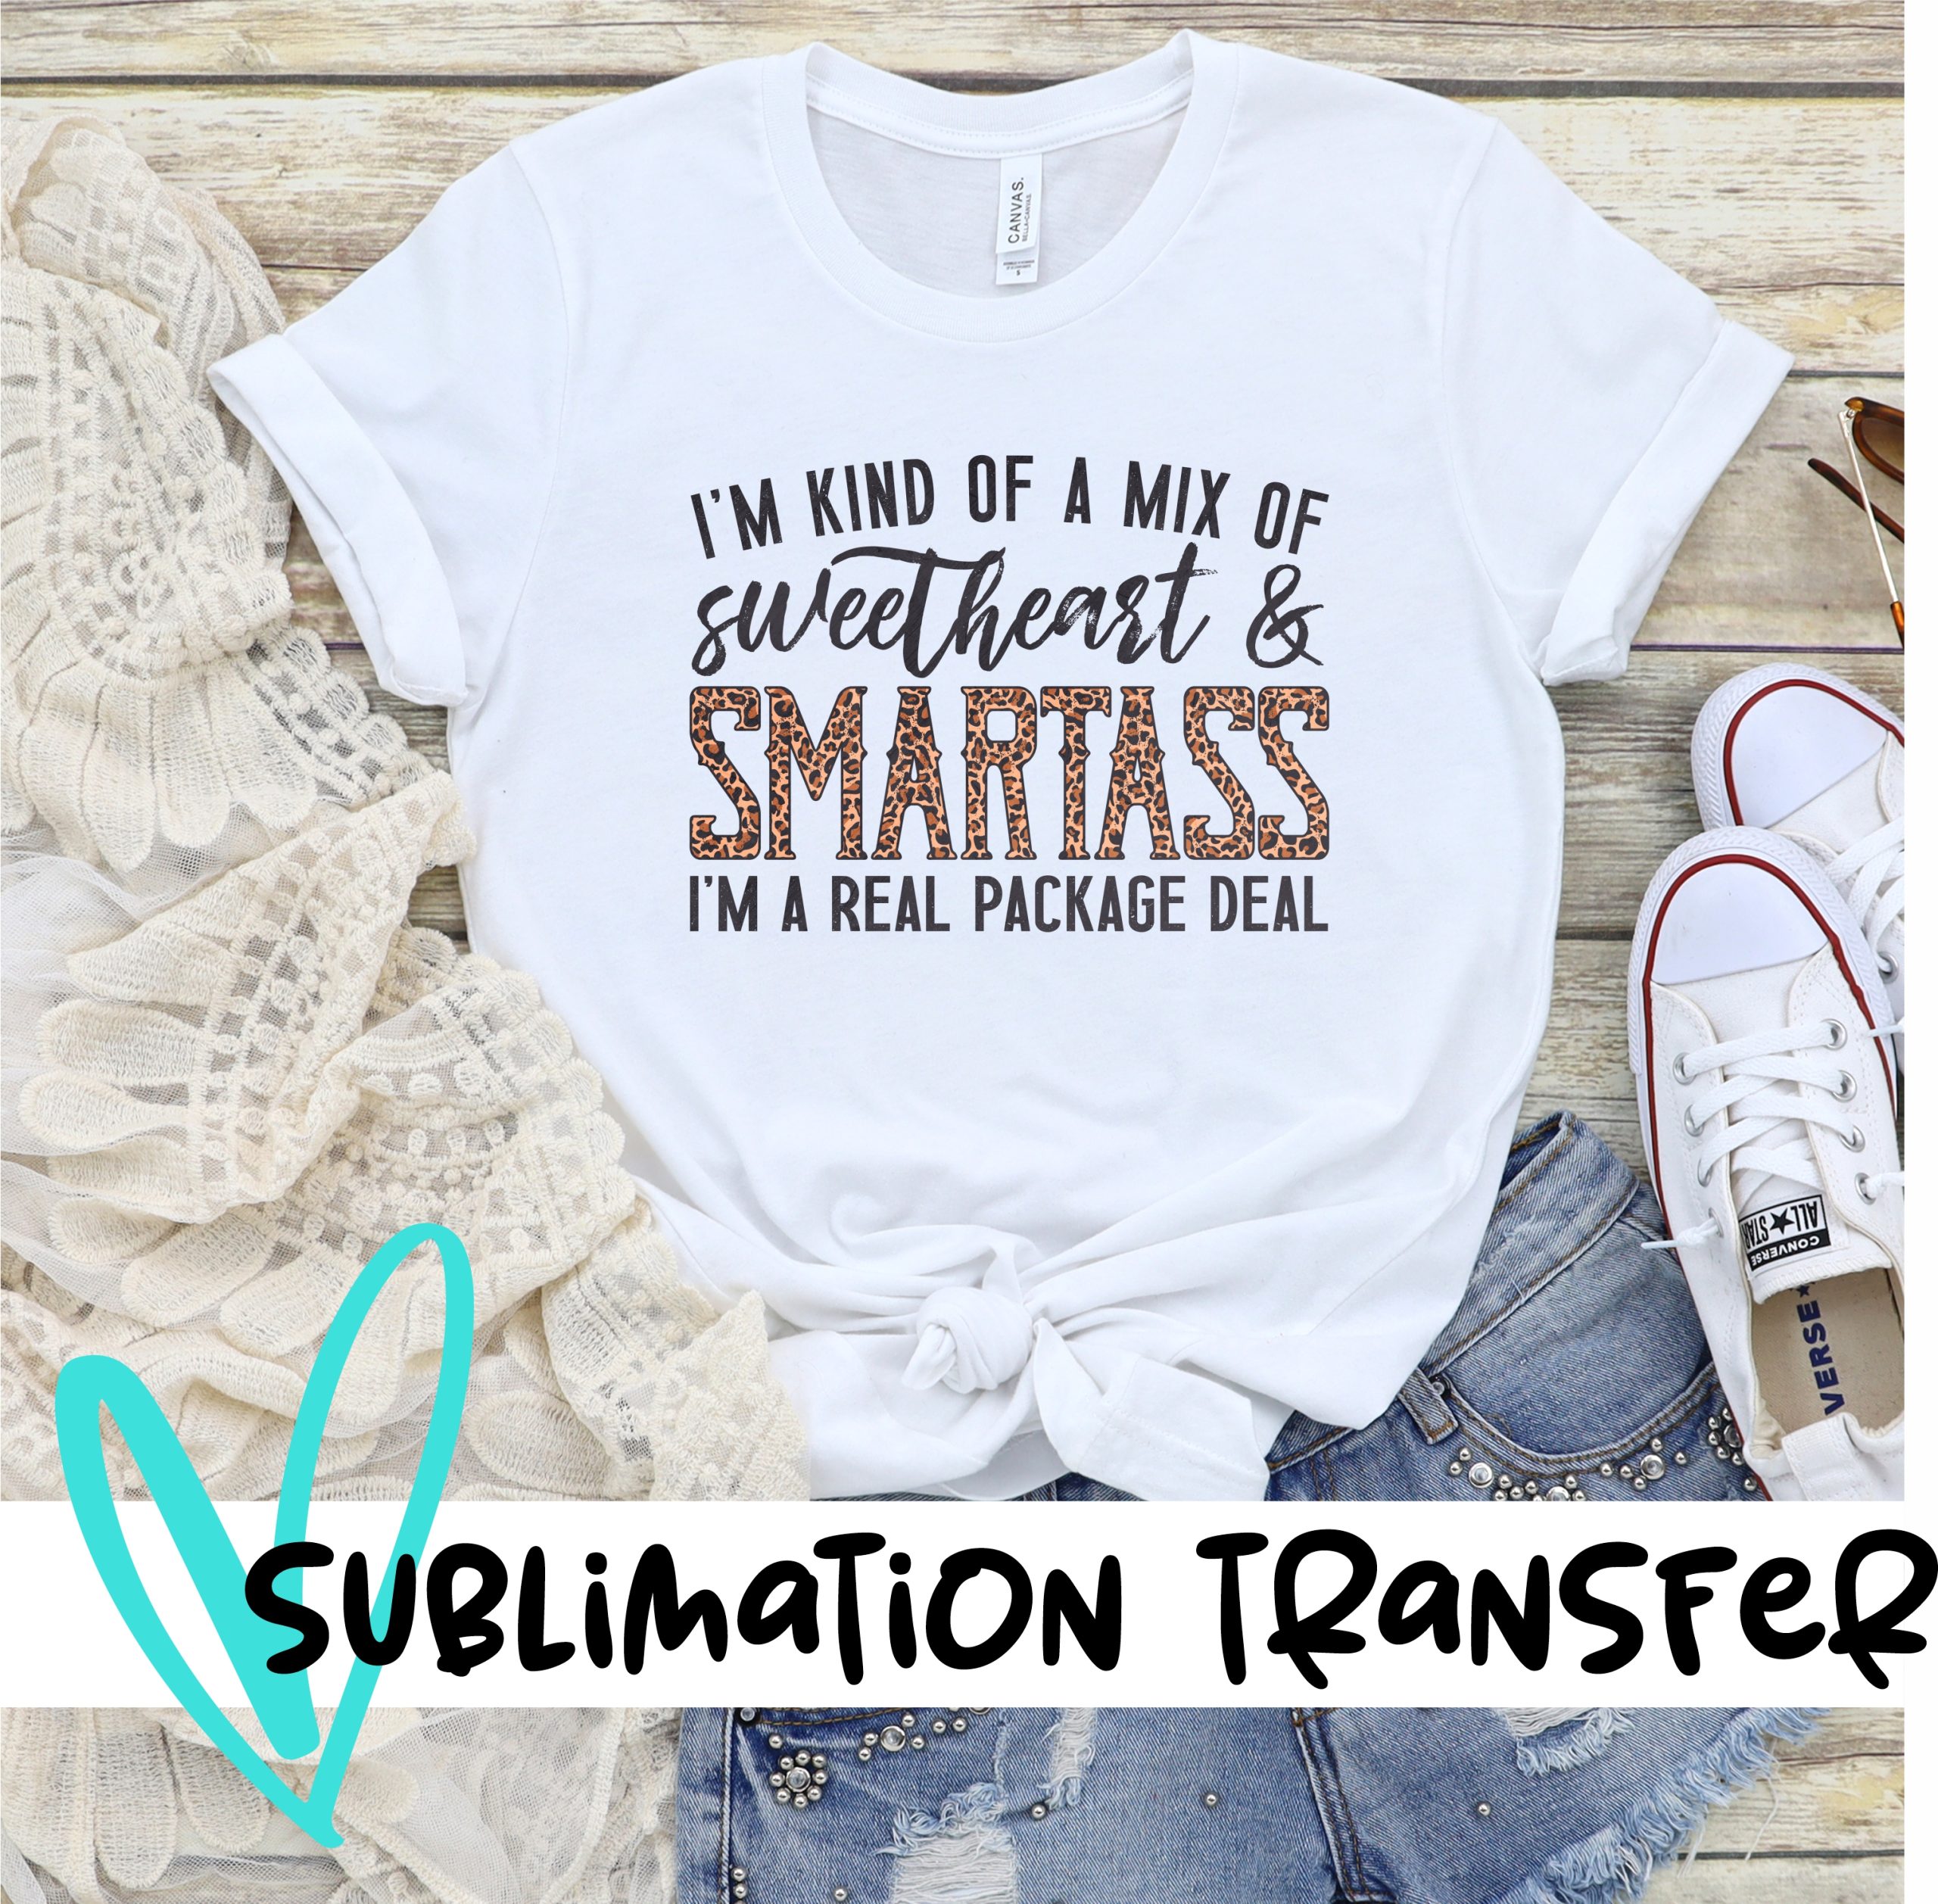 Sweetheart & smartass **Sublimation transfer** – socuteappliques.net